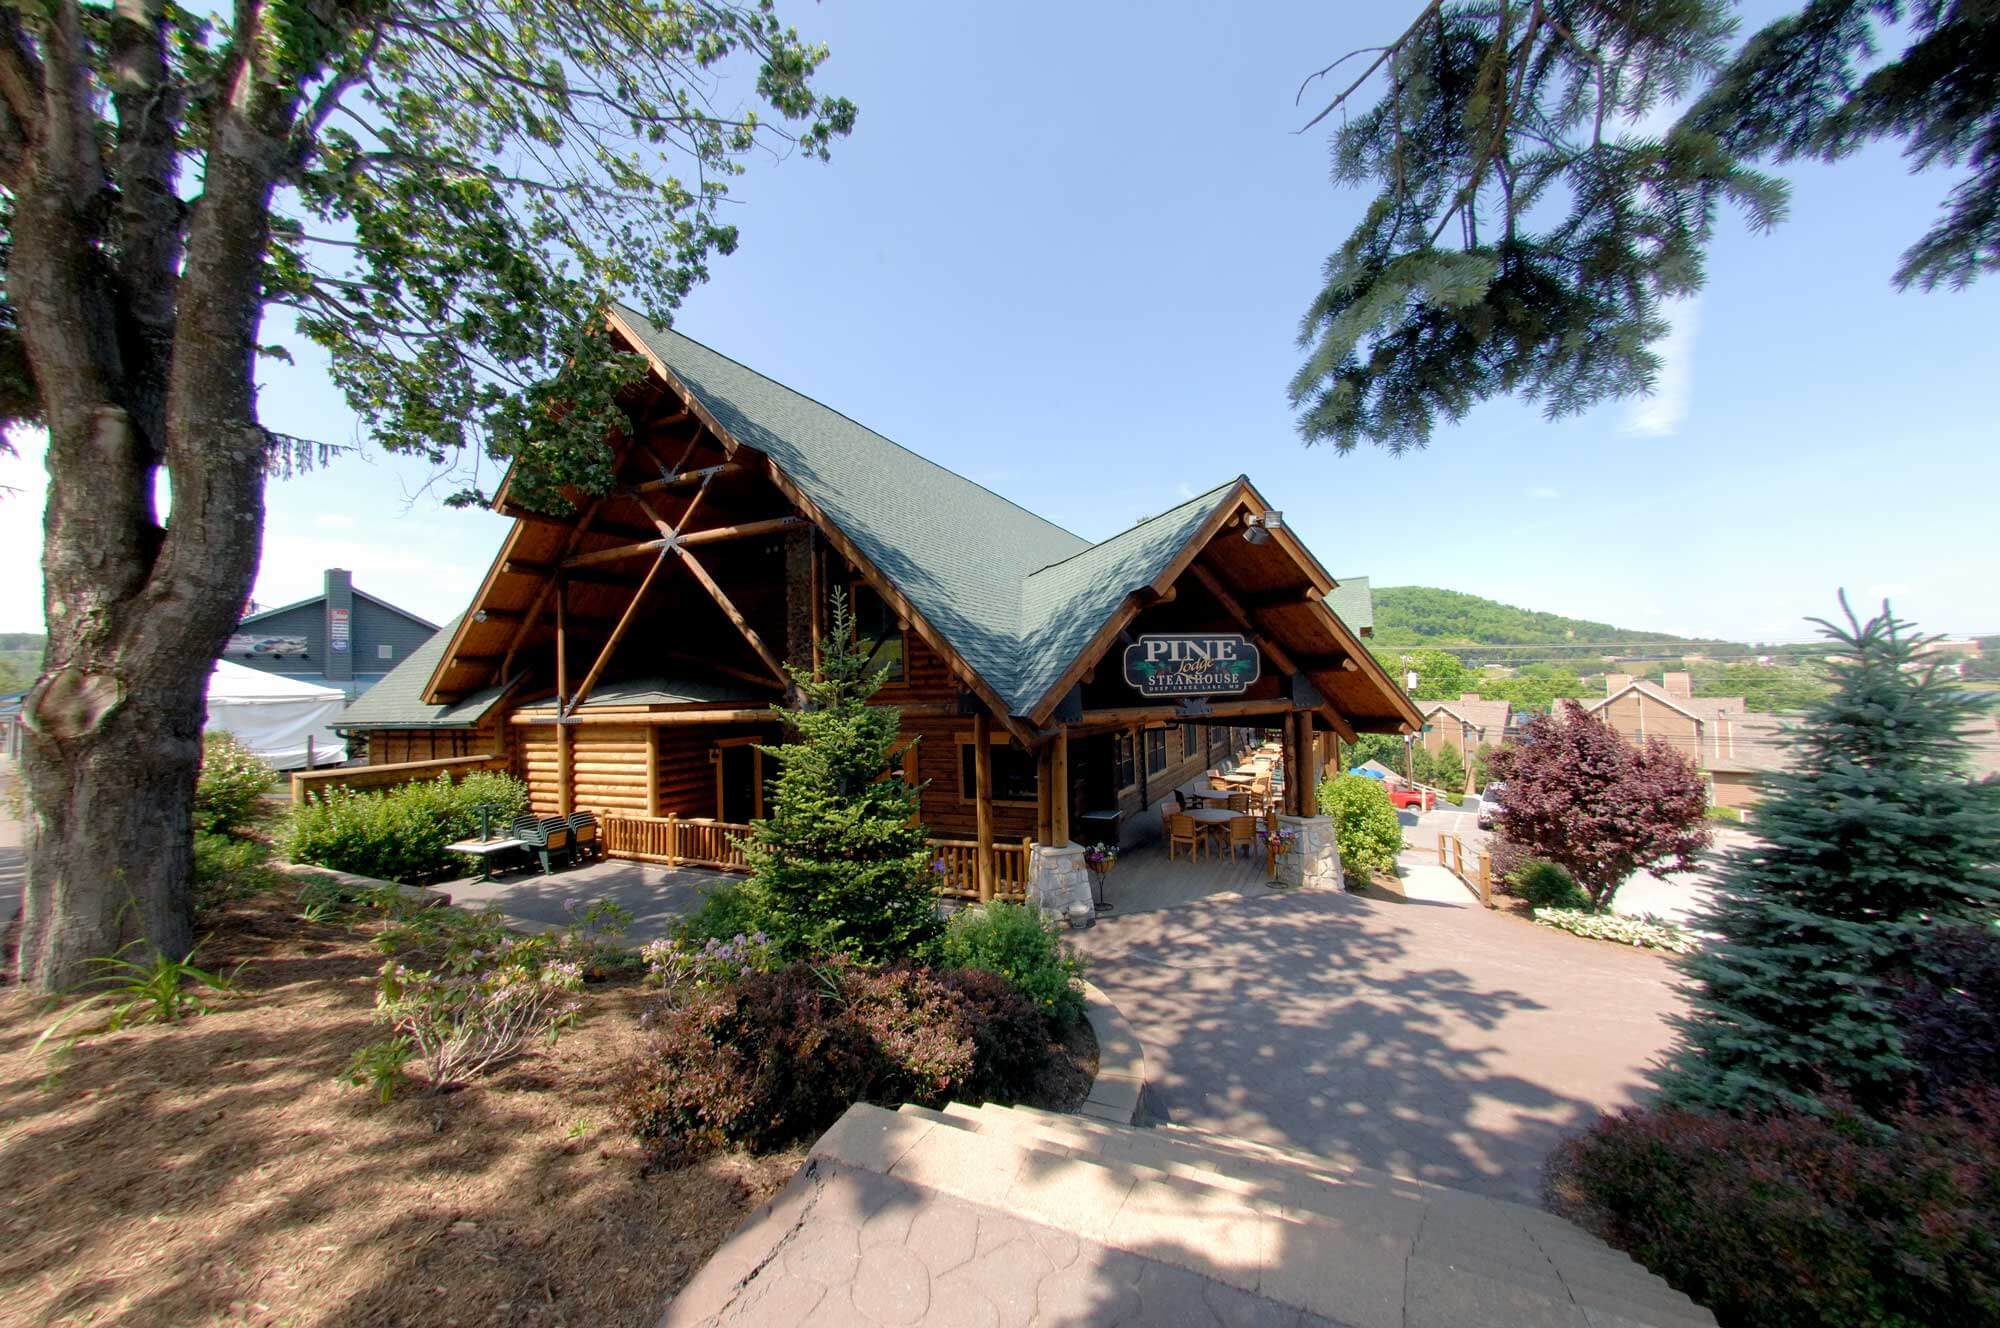 Pine Lodge Gift Shop